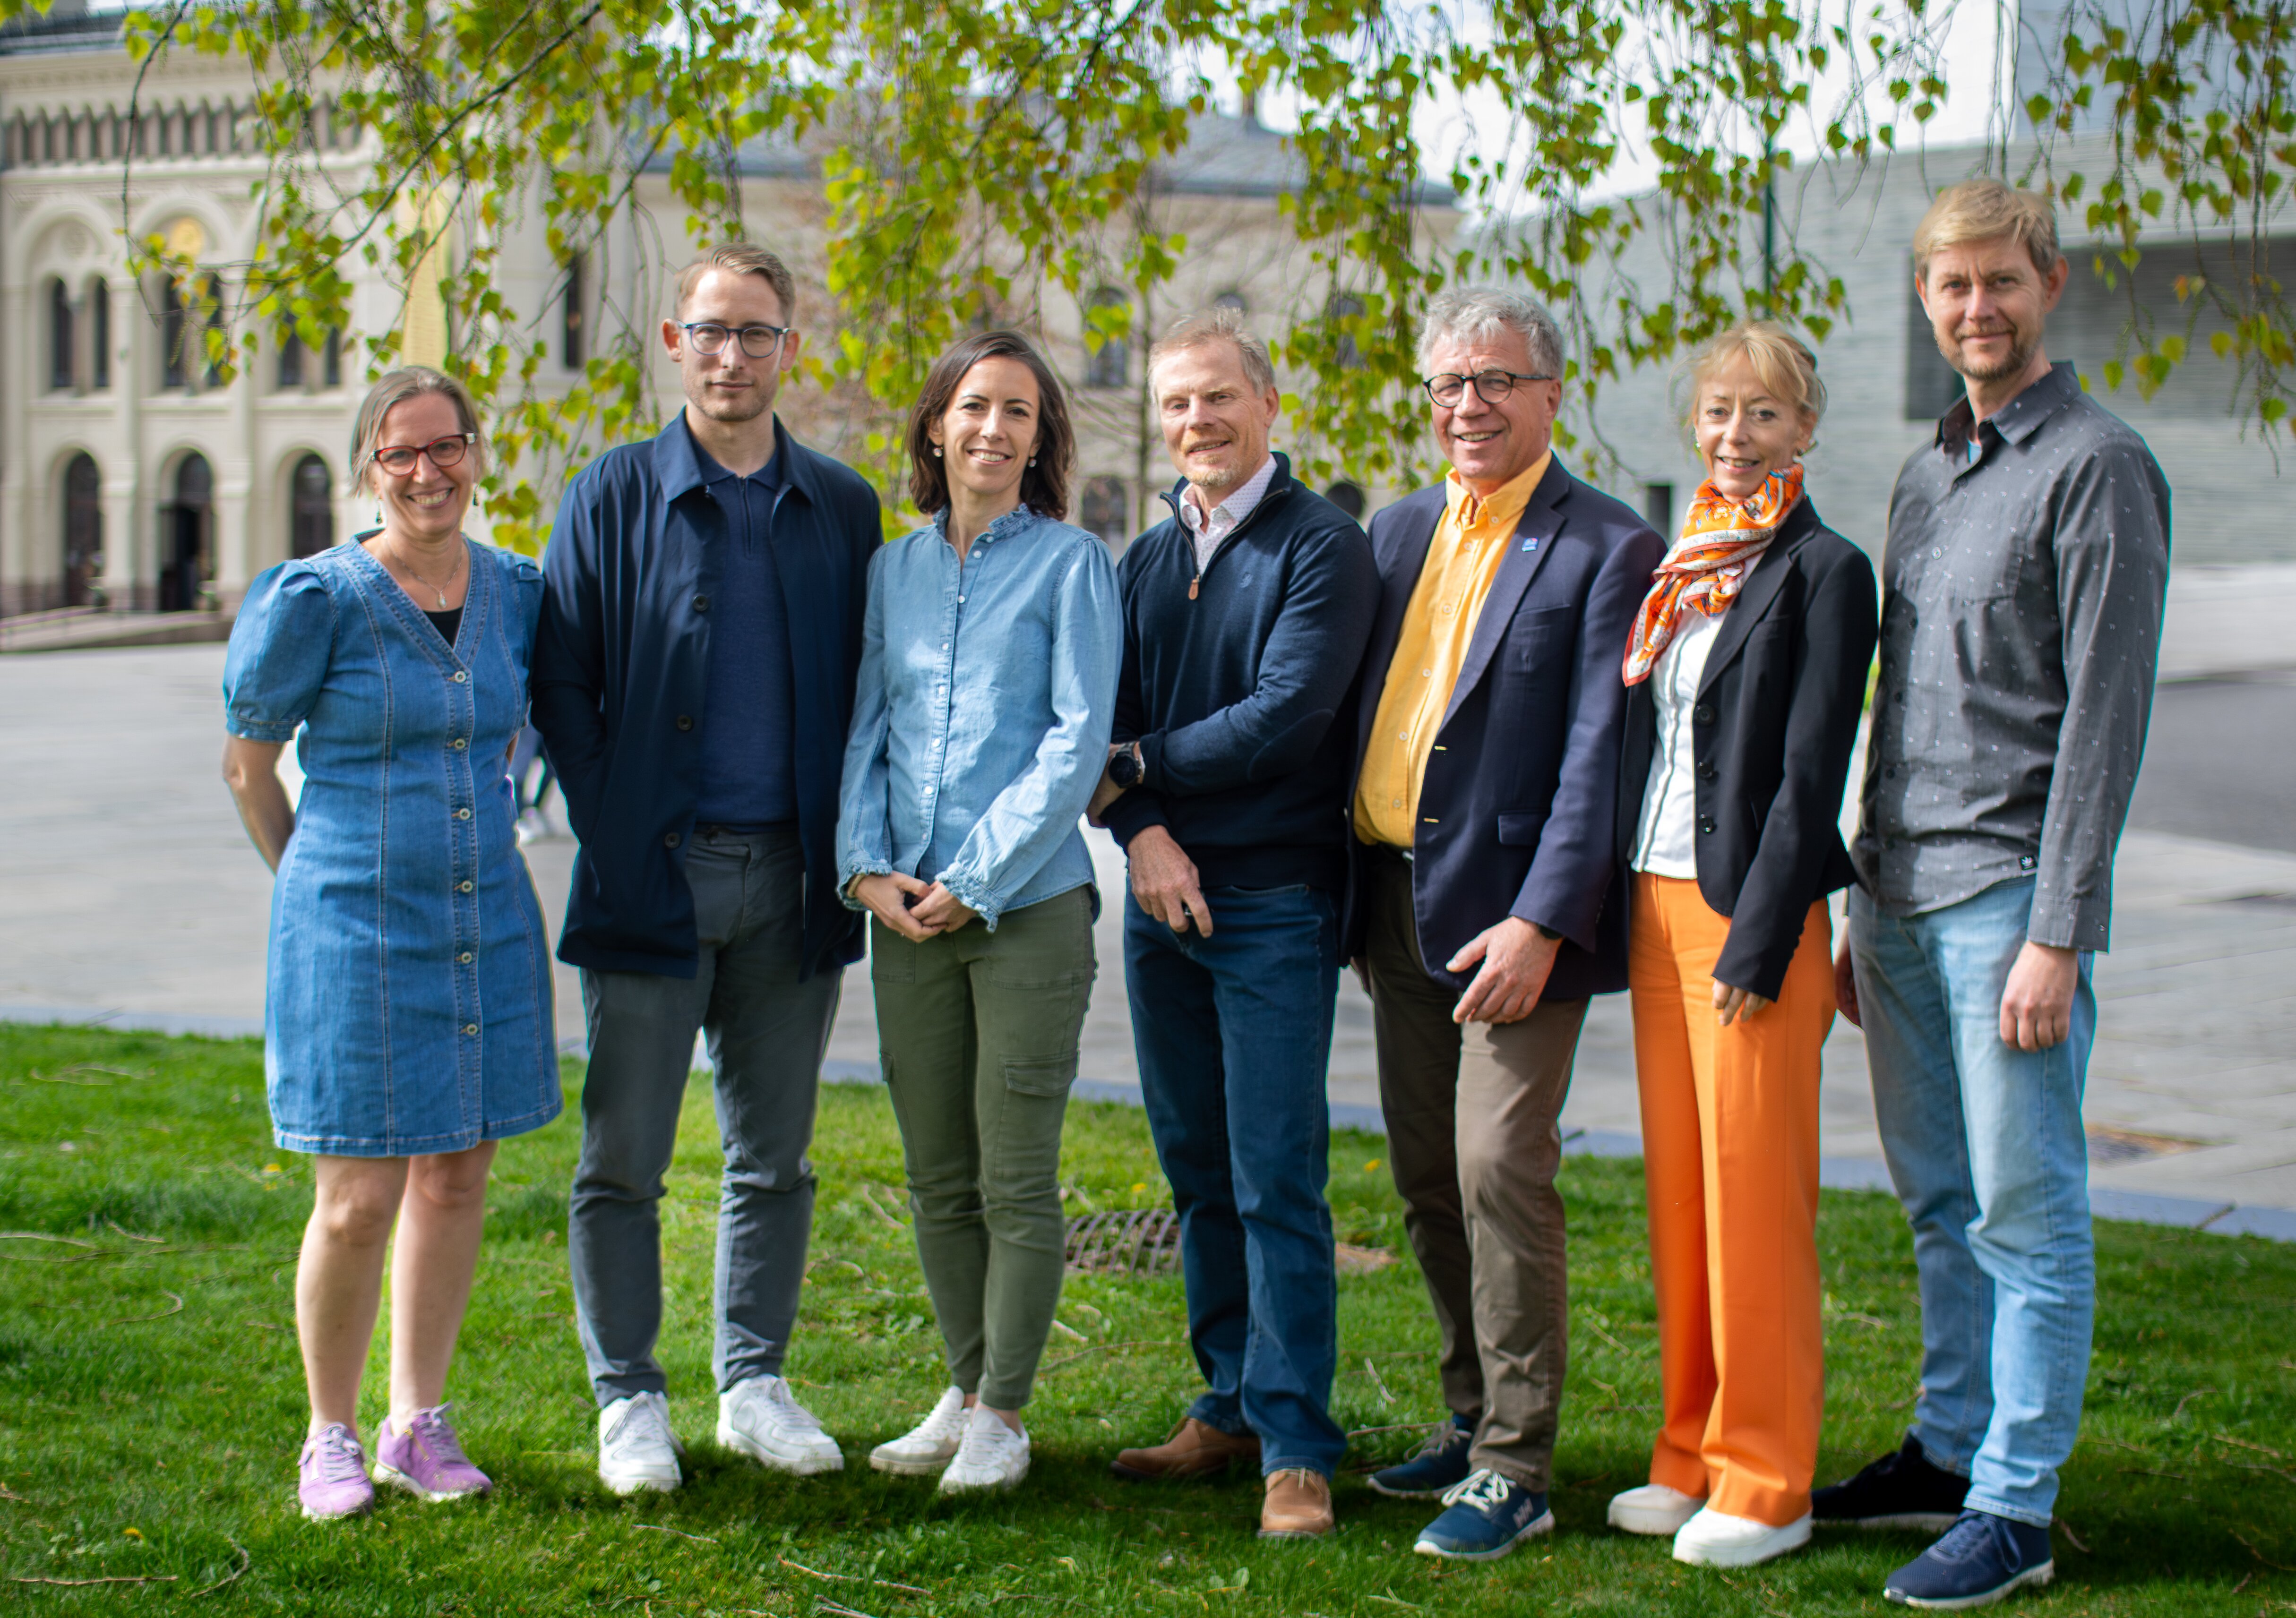 Fra venstre: Koordinator Anne Solheim, Kompetansemeglere: Vegard Sæterøy, Katja Kerschke, Per Olve Tobiassen, Ola Rostad, Trine Radmann og Gisle Mardal